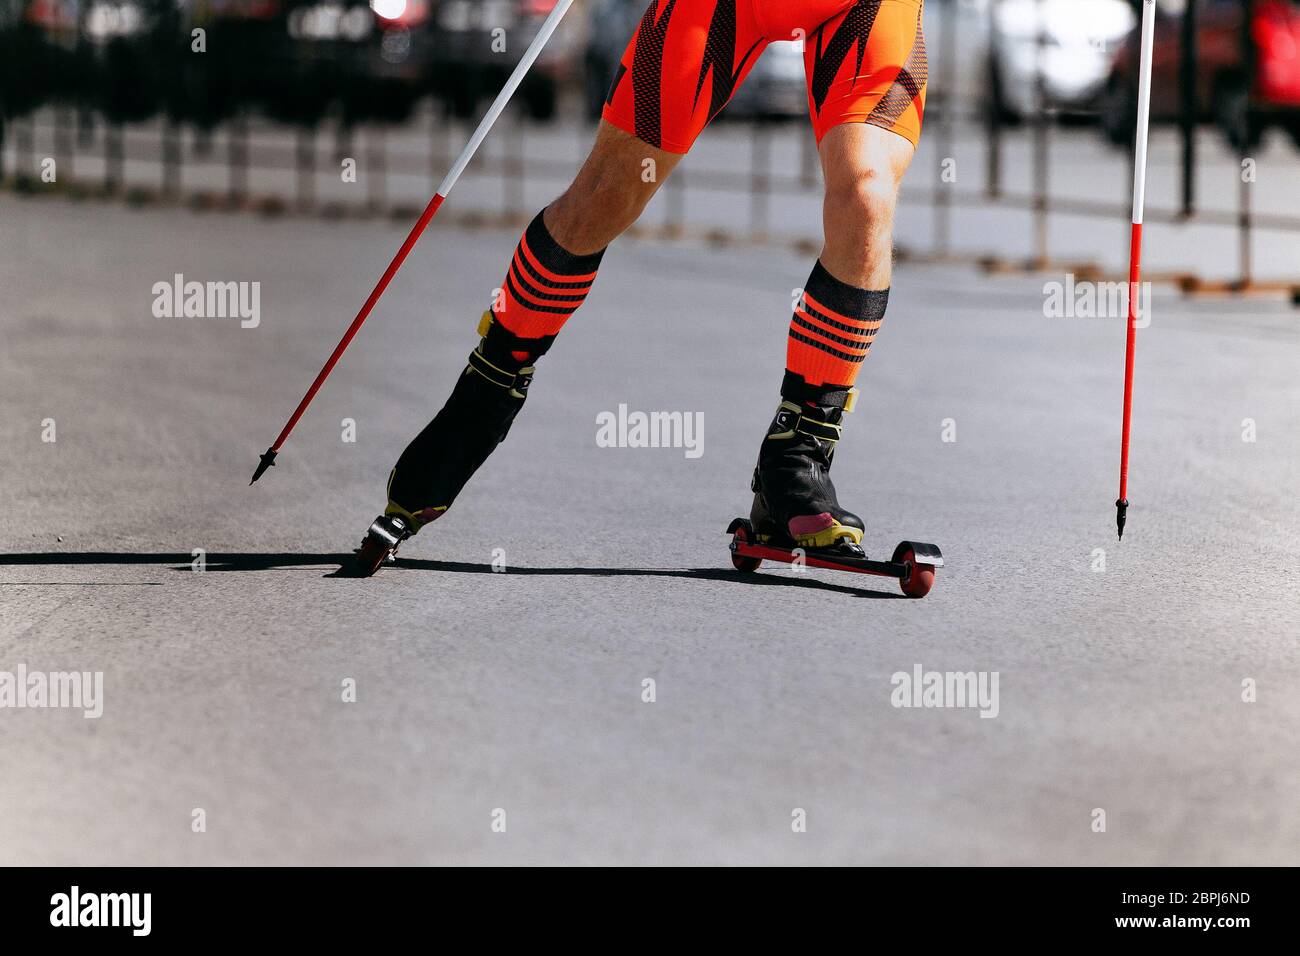 legs of skier athlete on roller ski and poles Stock Photo